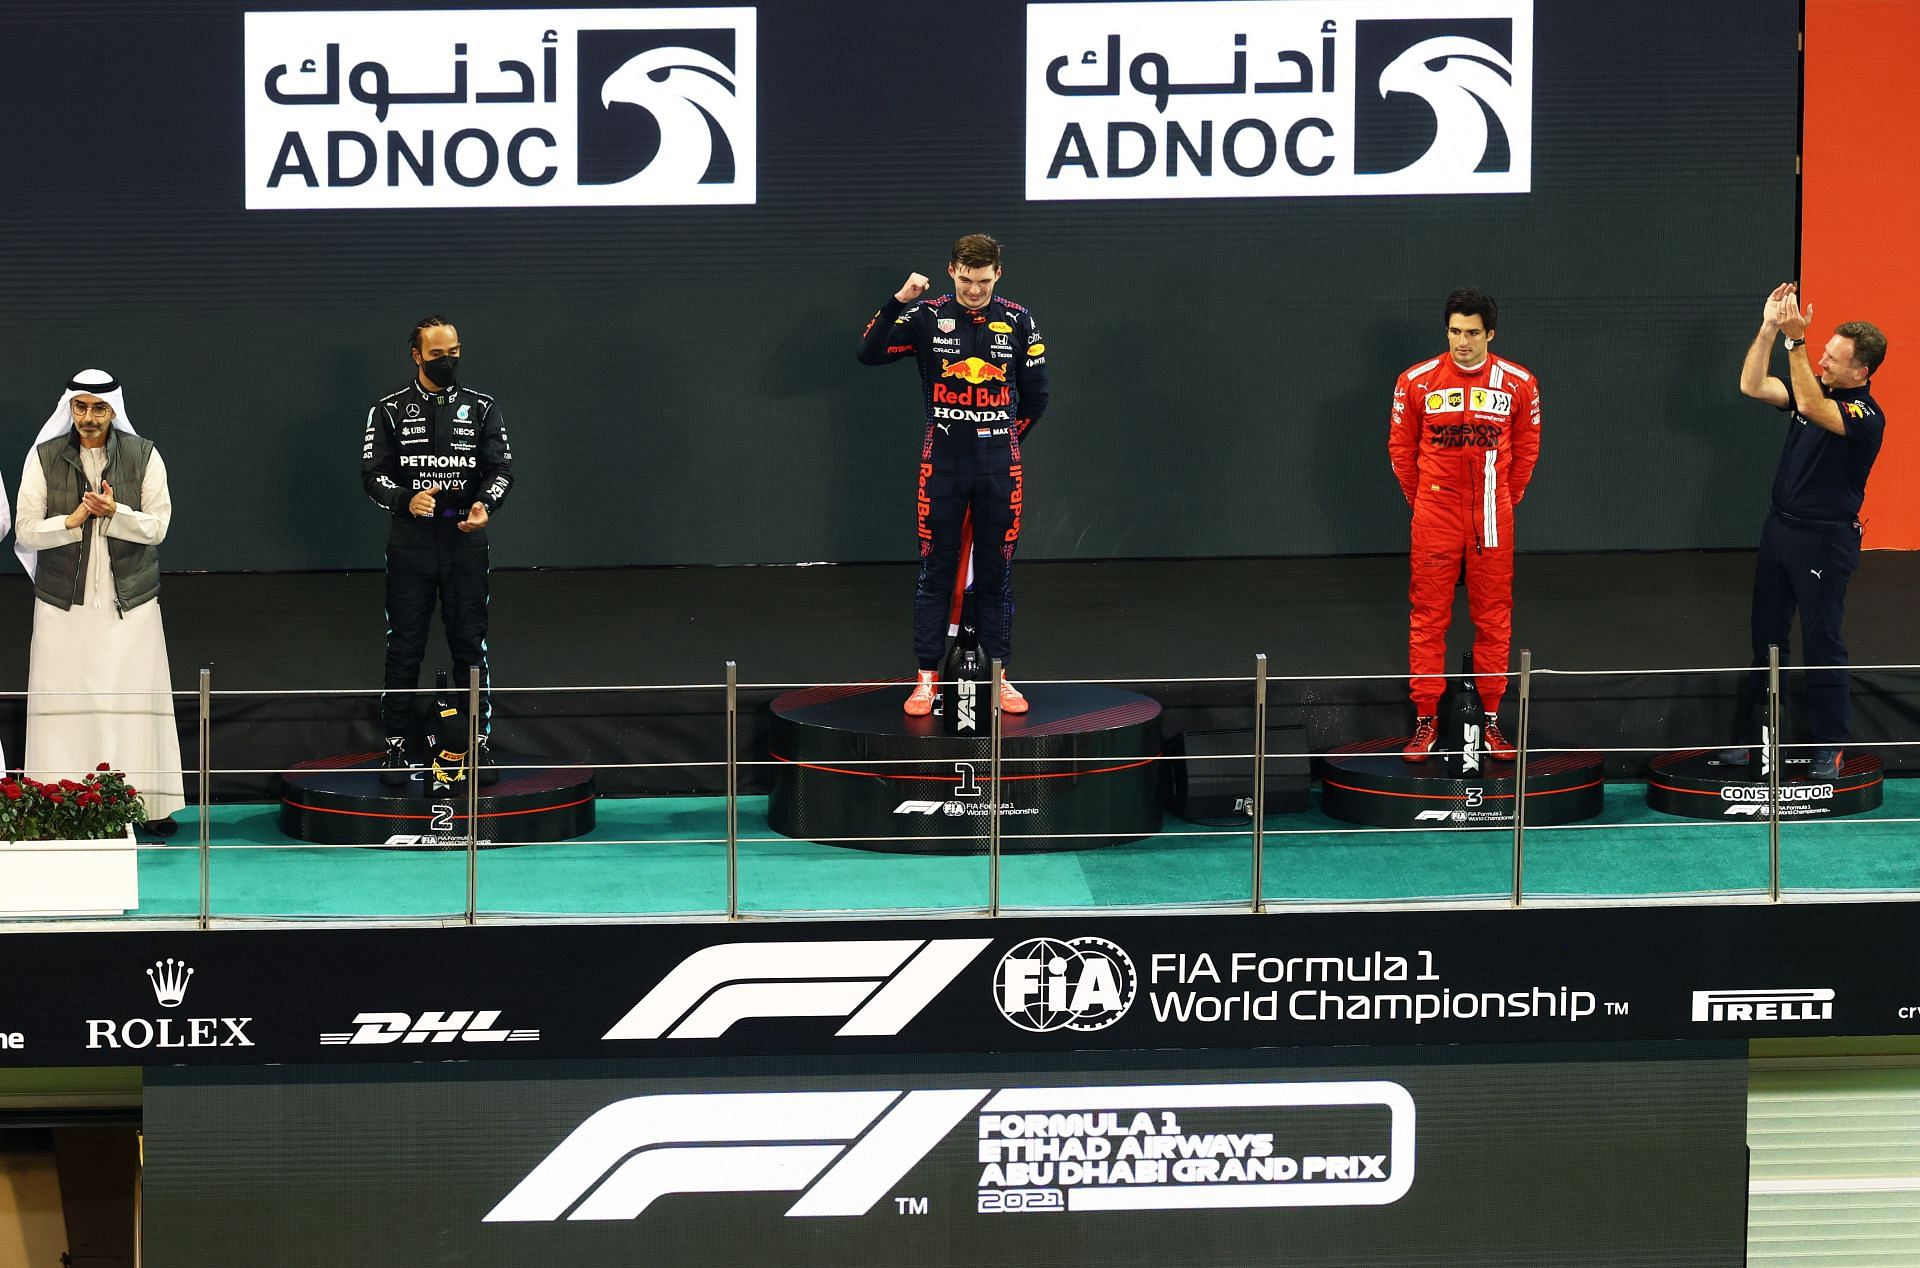 F1 Grand Prix of Abu Dhabi - Max Verstappen wins his maiden title 